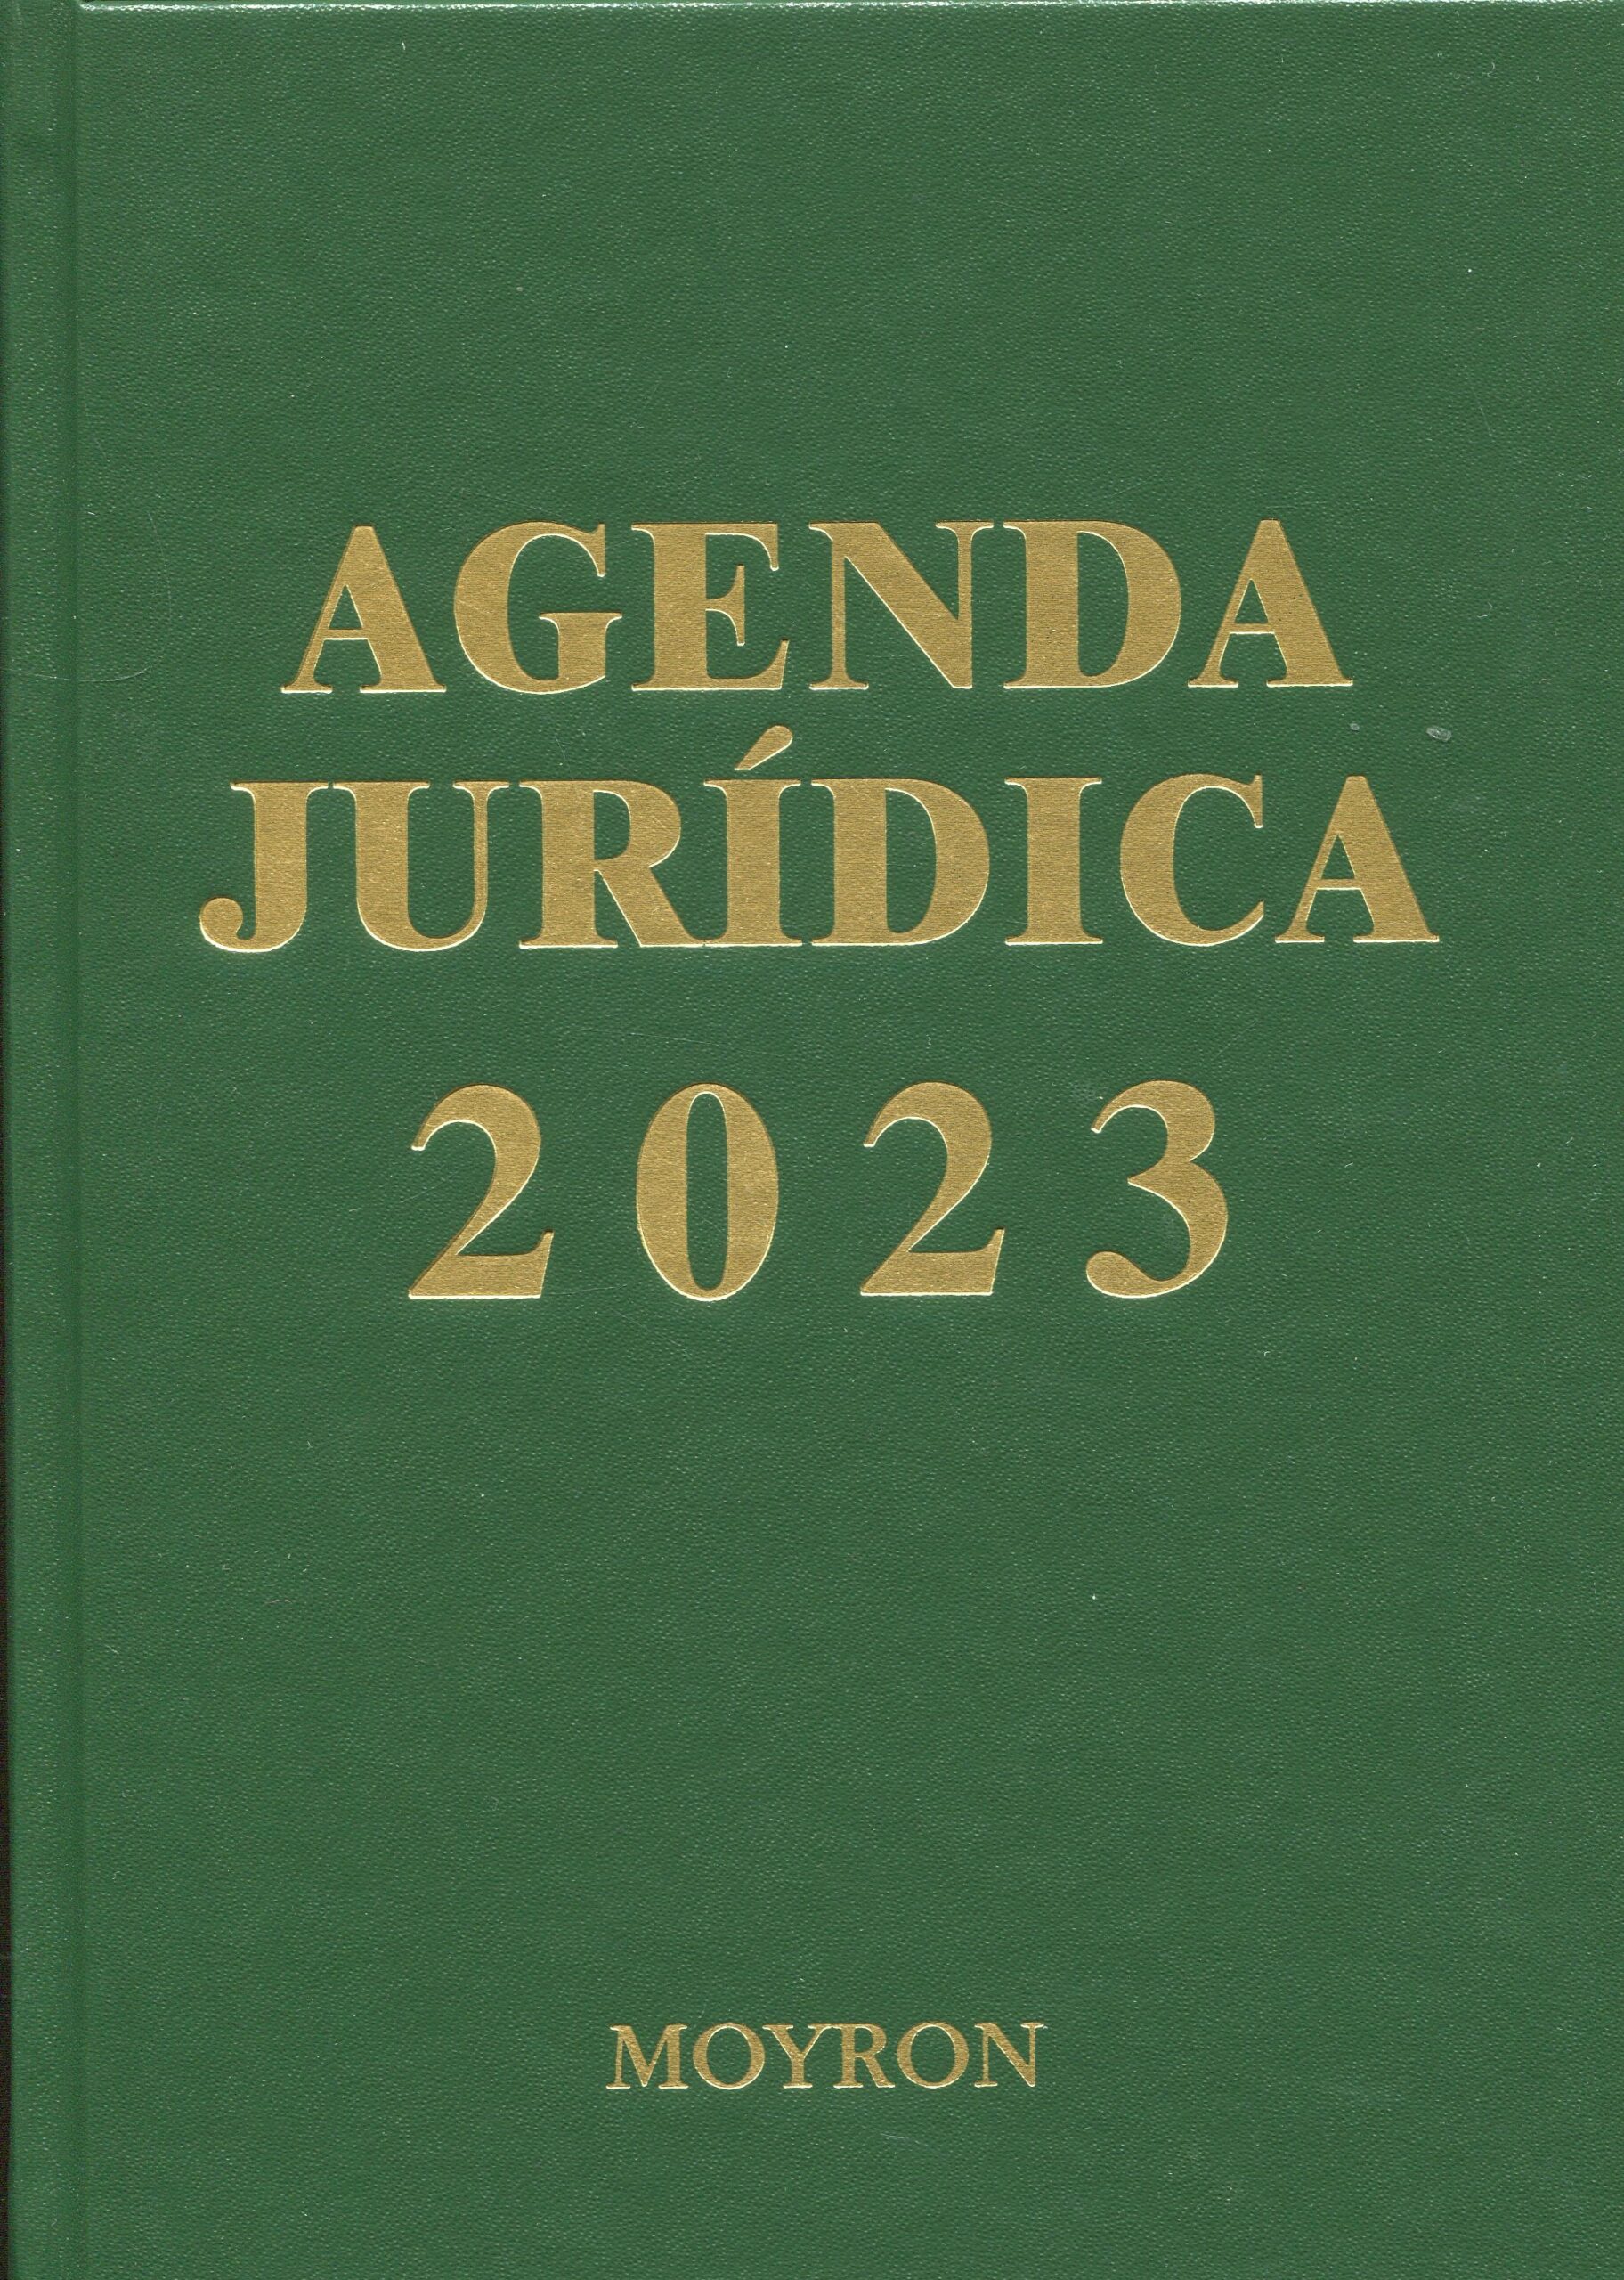 Agenda Jurídica Moyron 2023. 101086752